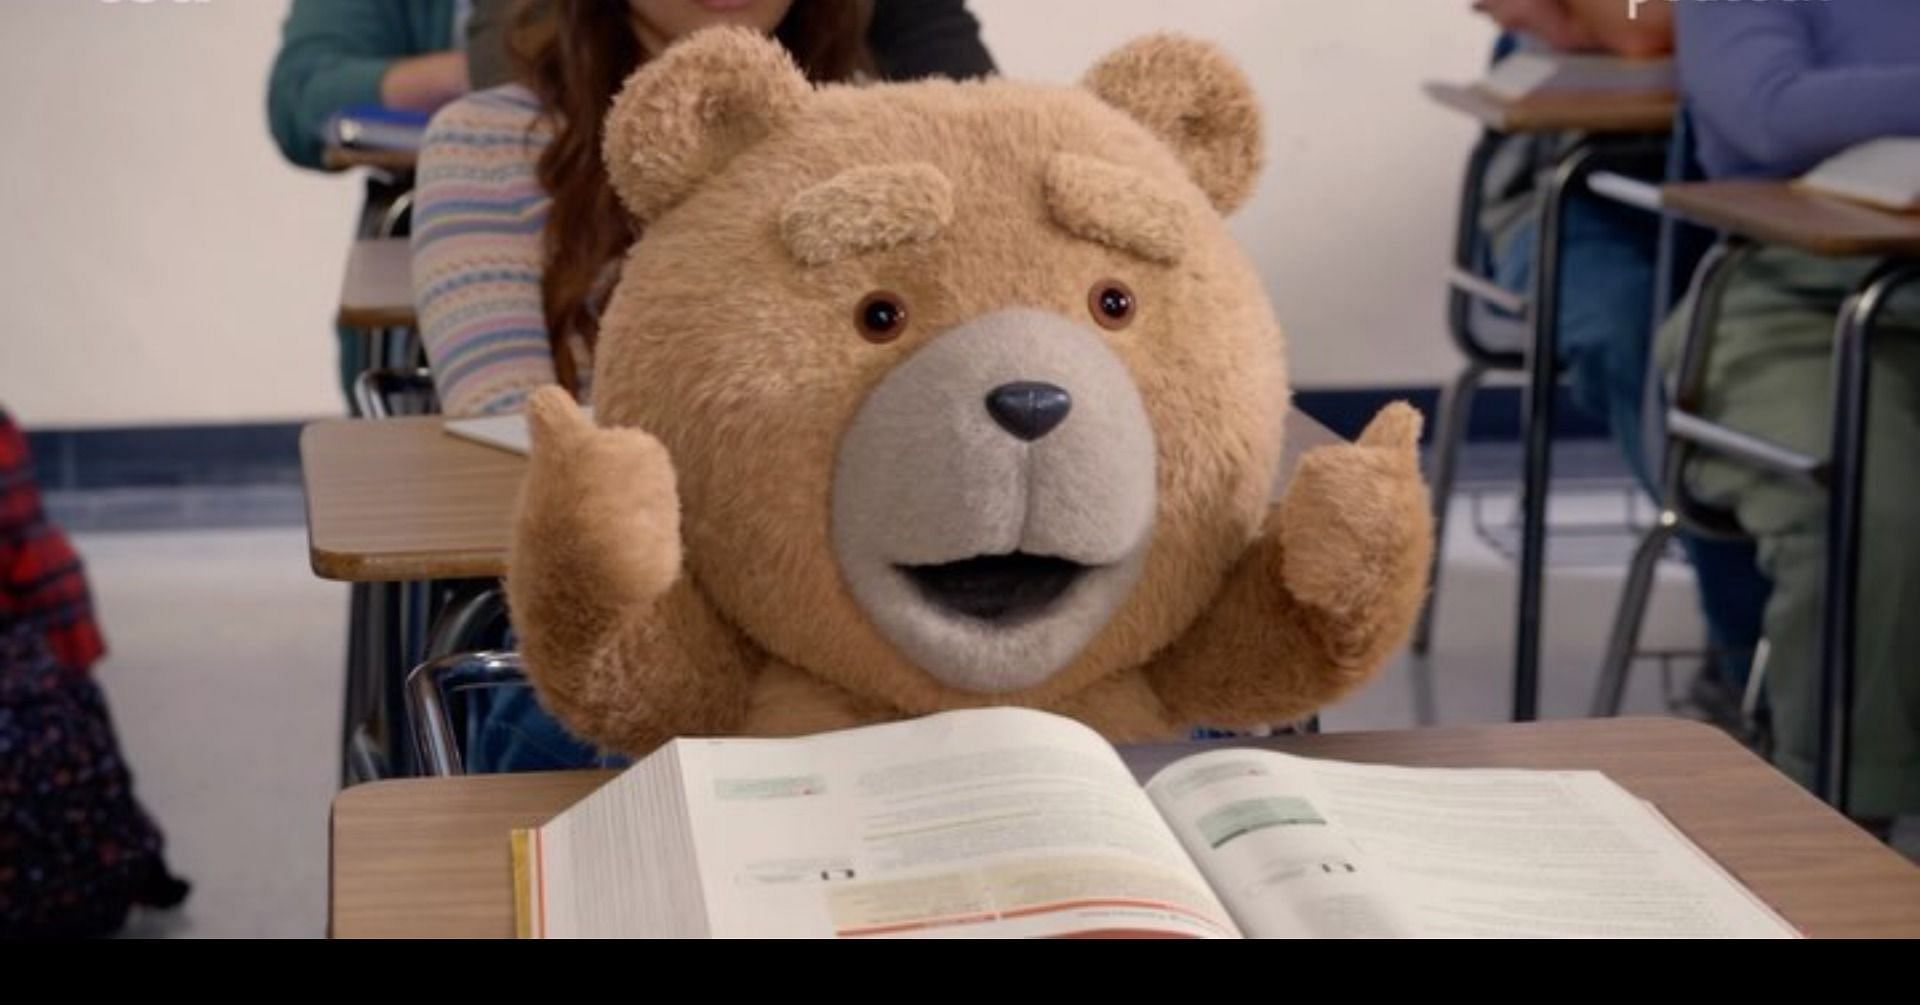 The infamous teddy (Image via macfarlaneseth@Instagram)